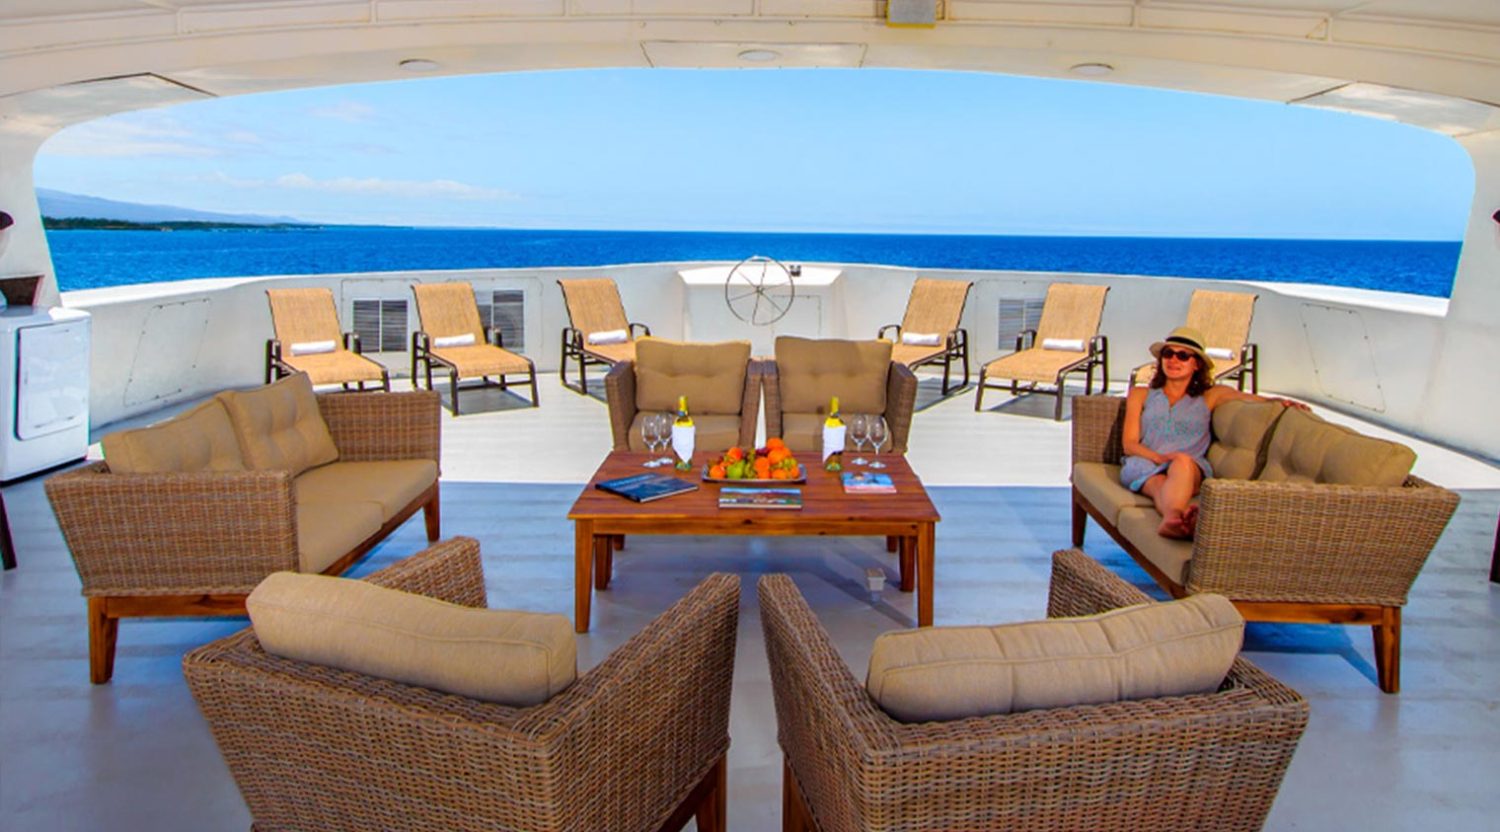 outdoor living room of treasure of galapagos yacht of galapagos islands